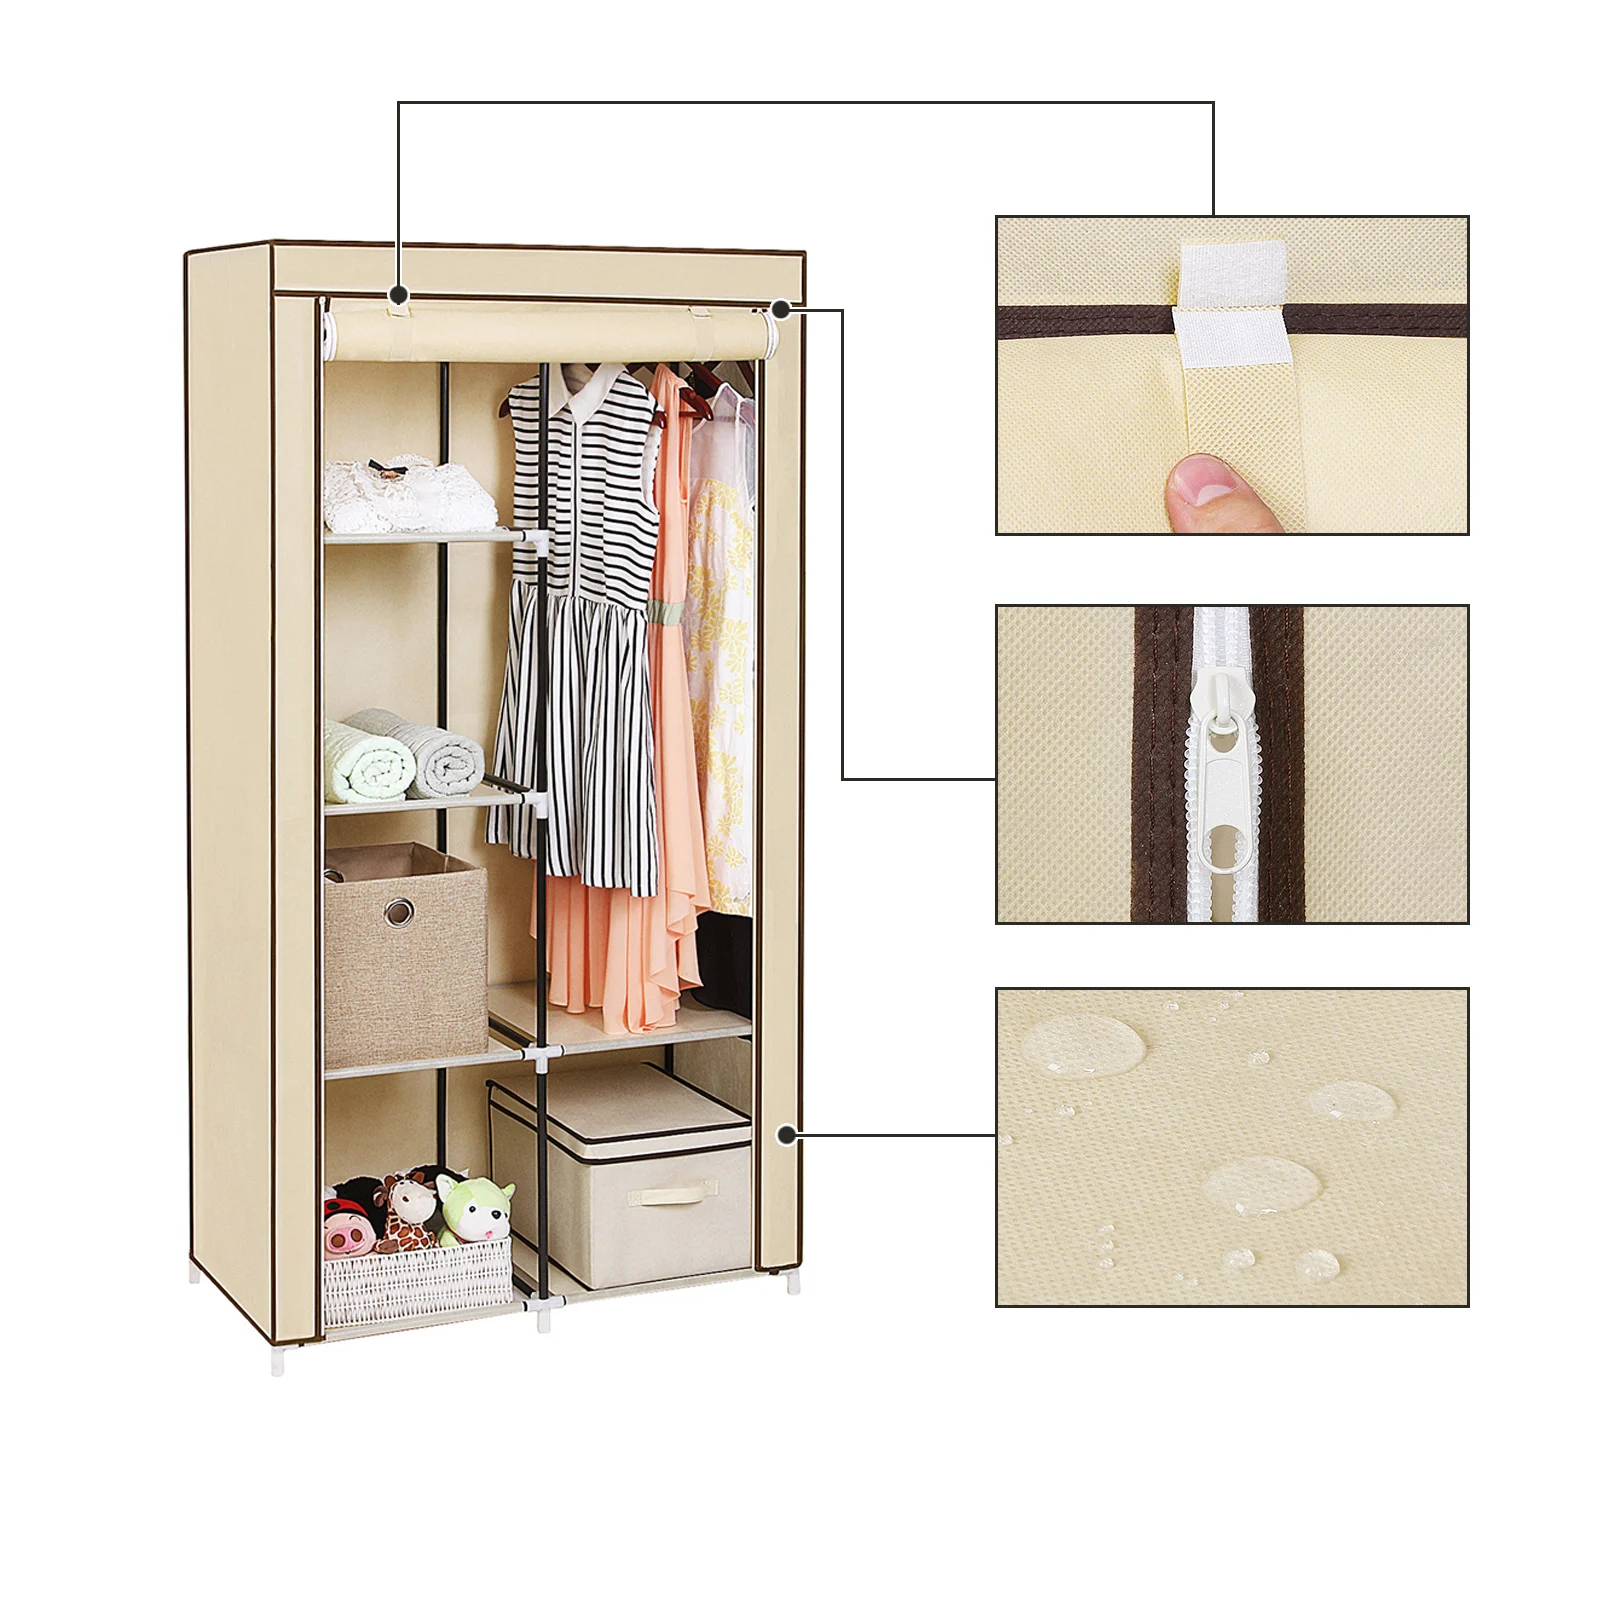 Customisable Metal Framed Fabric Wardrobe Clothes Organizer Foldable Large Capacity Bedroom Wardrobe